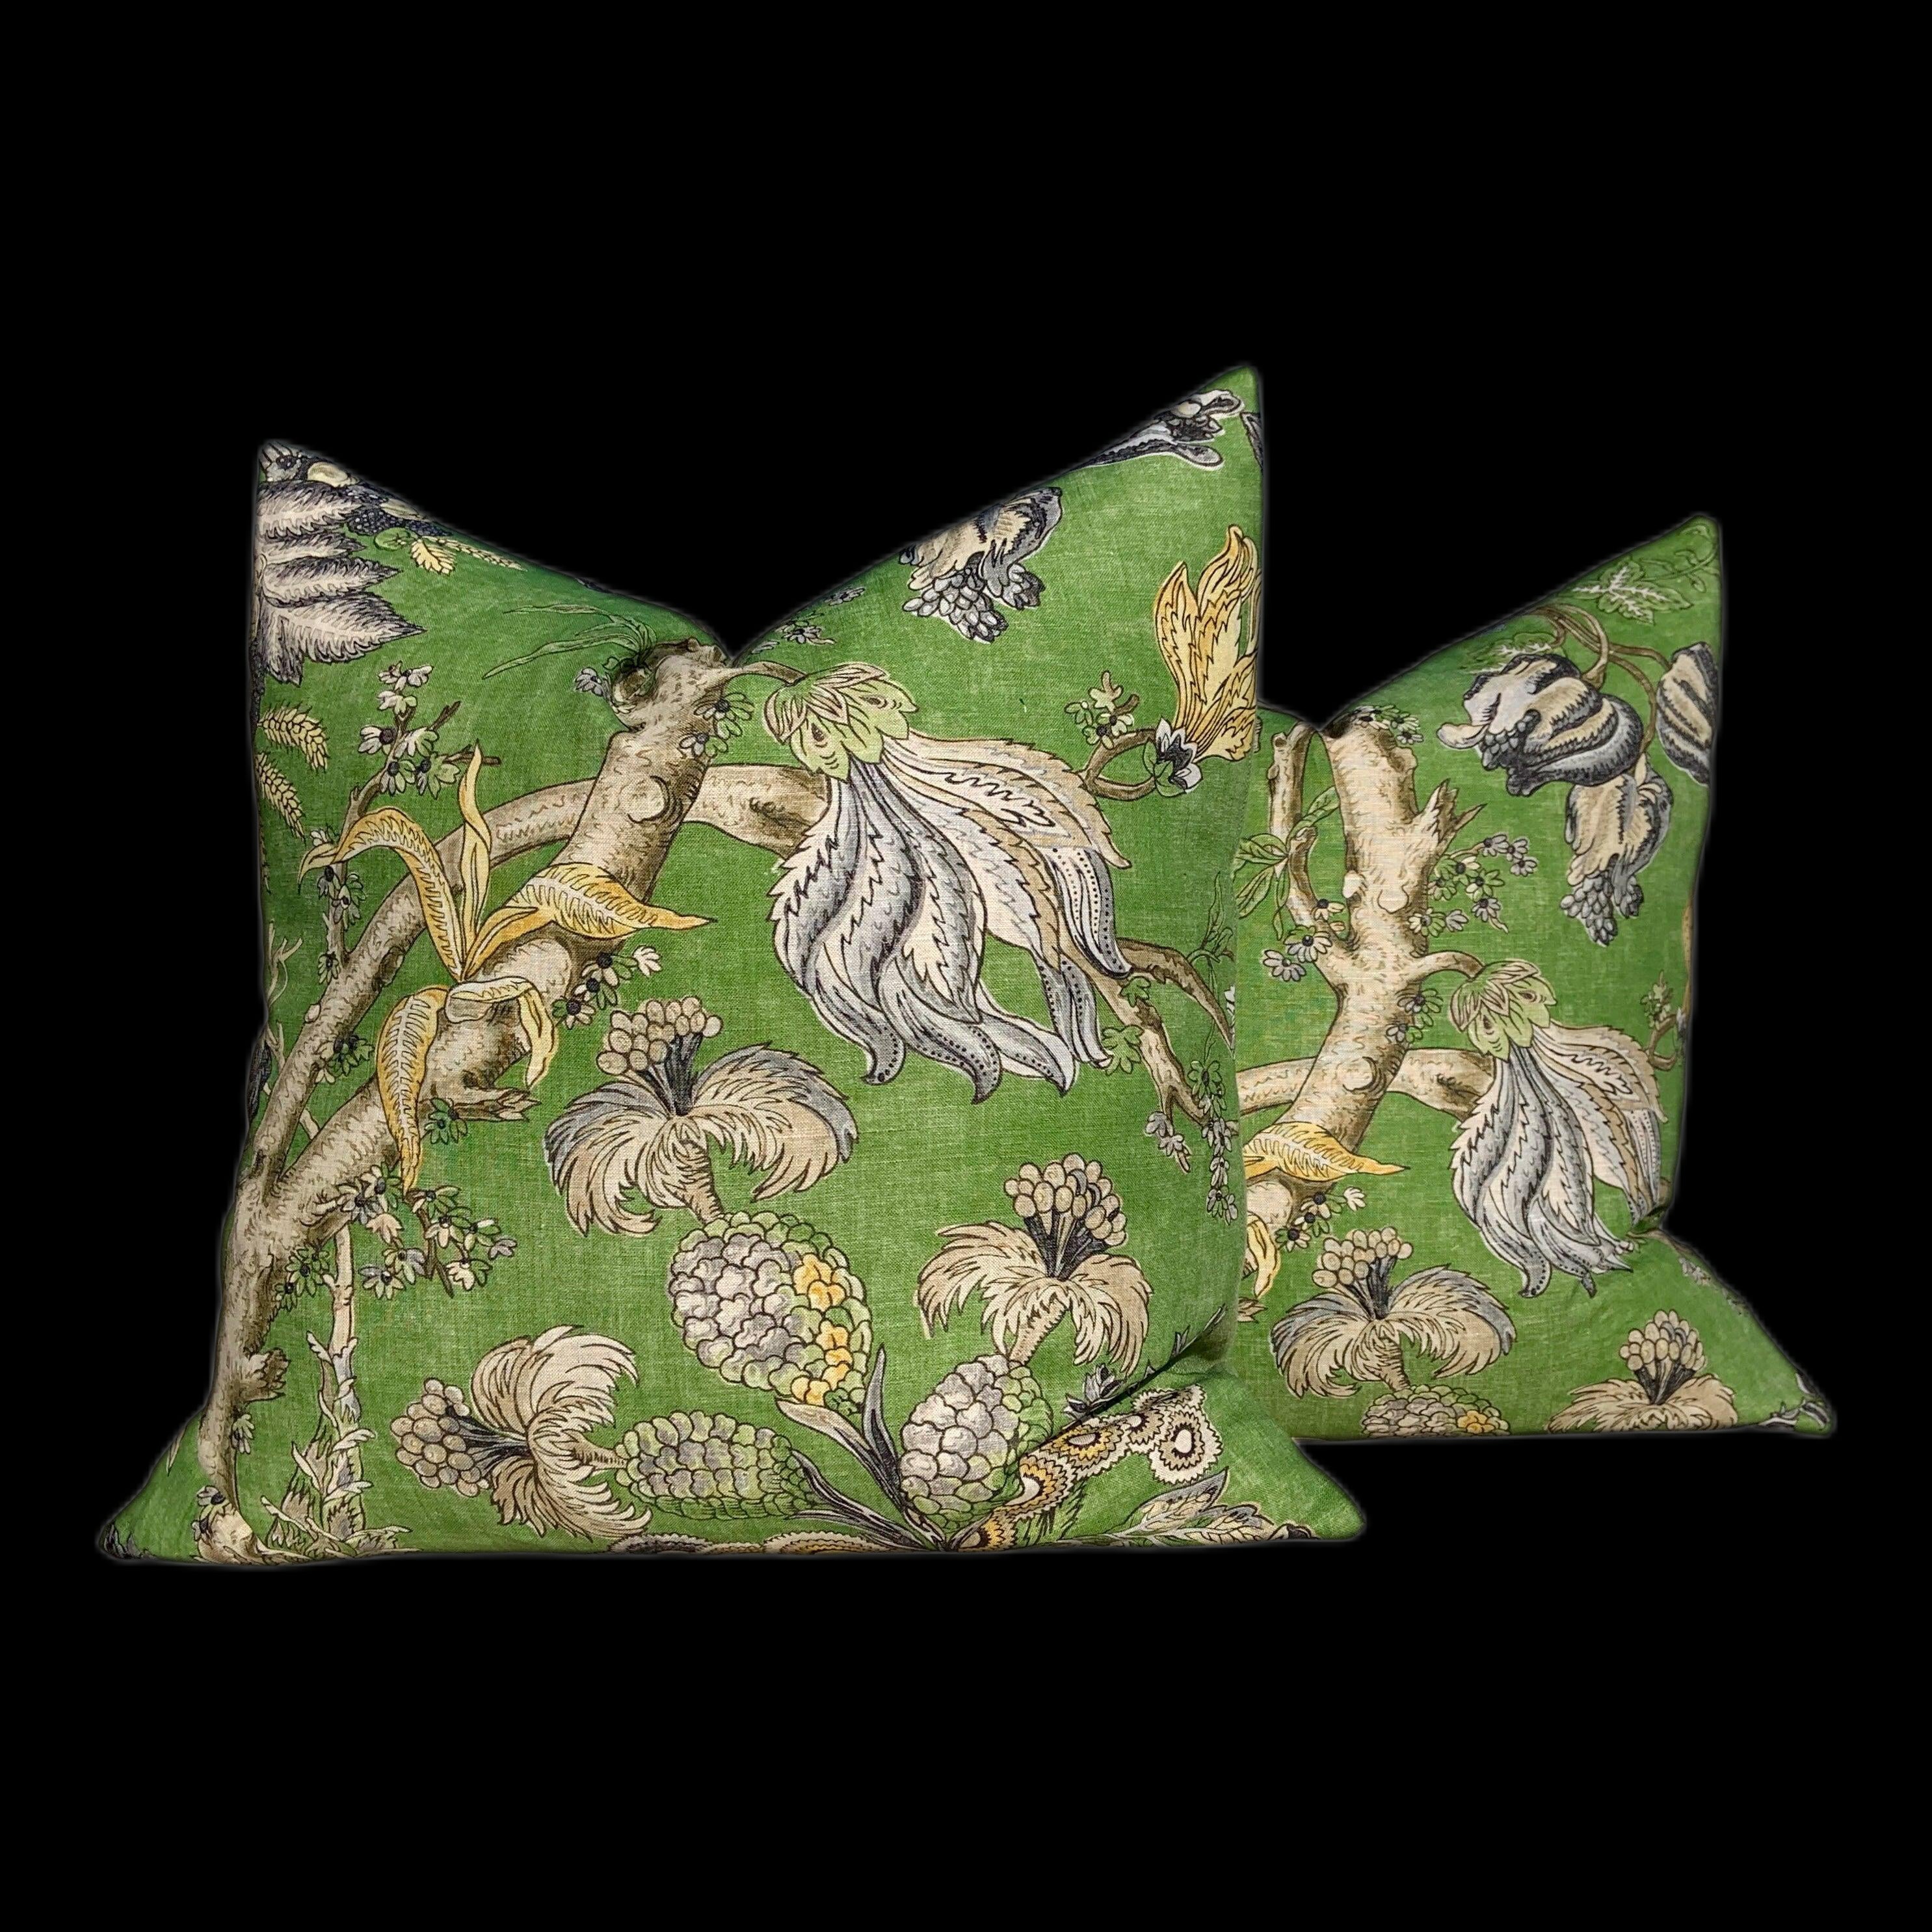 Chatelain Pillow Cover in Green. Designer Decorative Pillow Cover in Green French Country Floral Accent lumbar Cushion Case Euro Sham